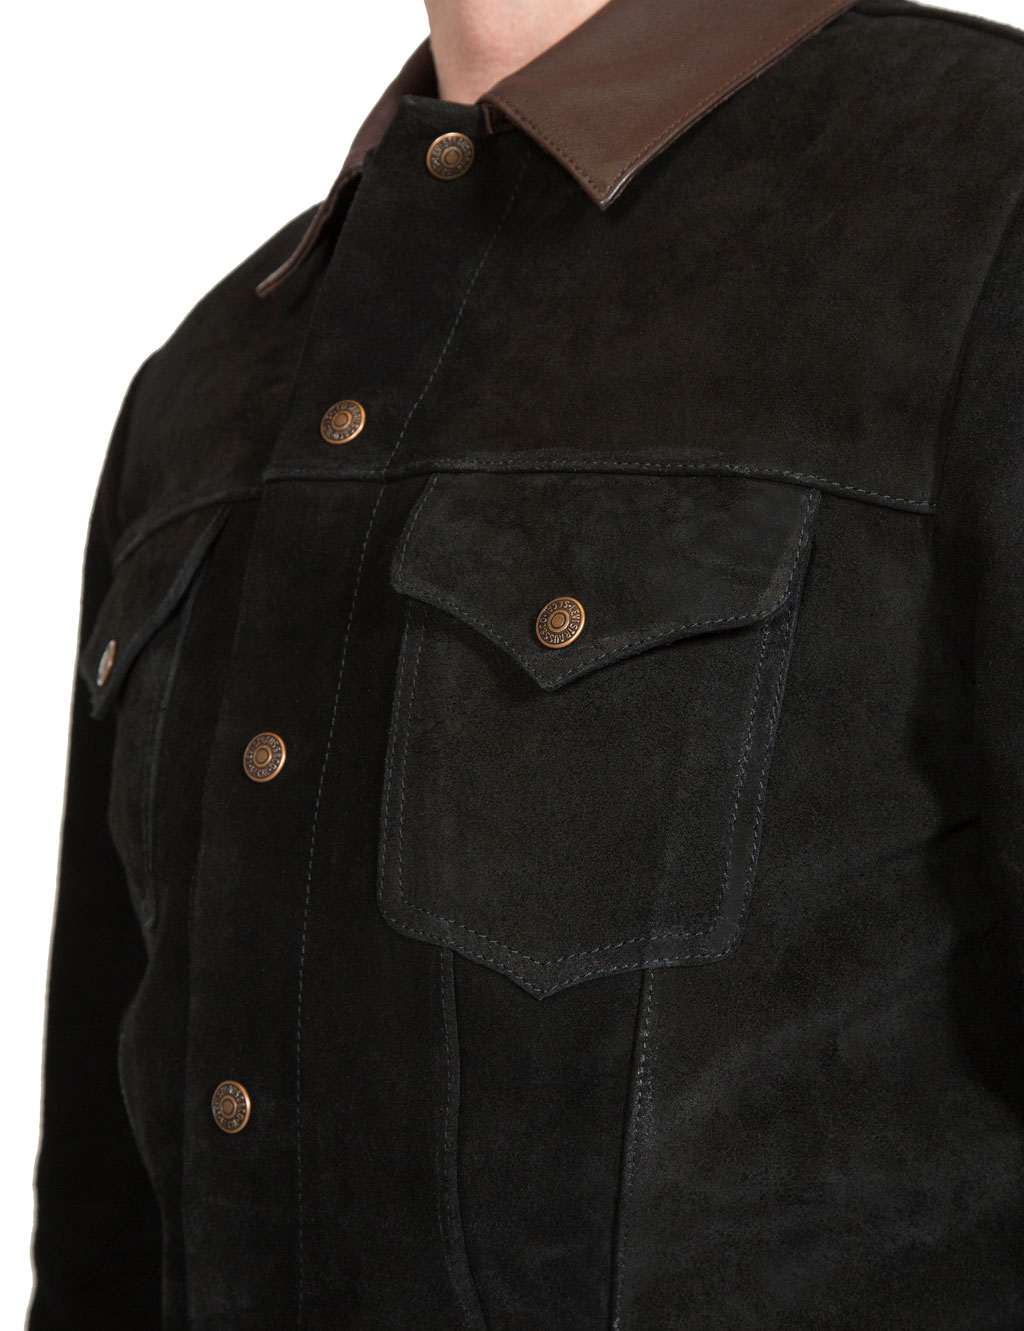 Levis Vintage Clothing - Suede Trucker Jacket - Pirate Black